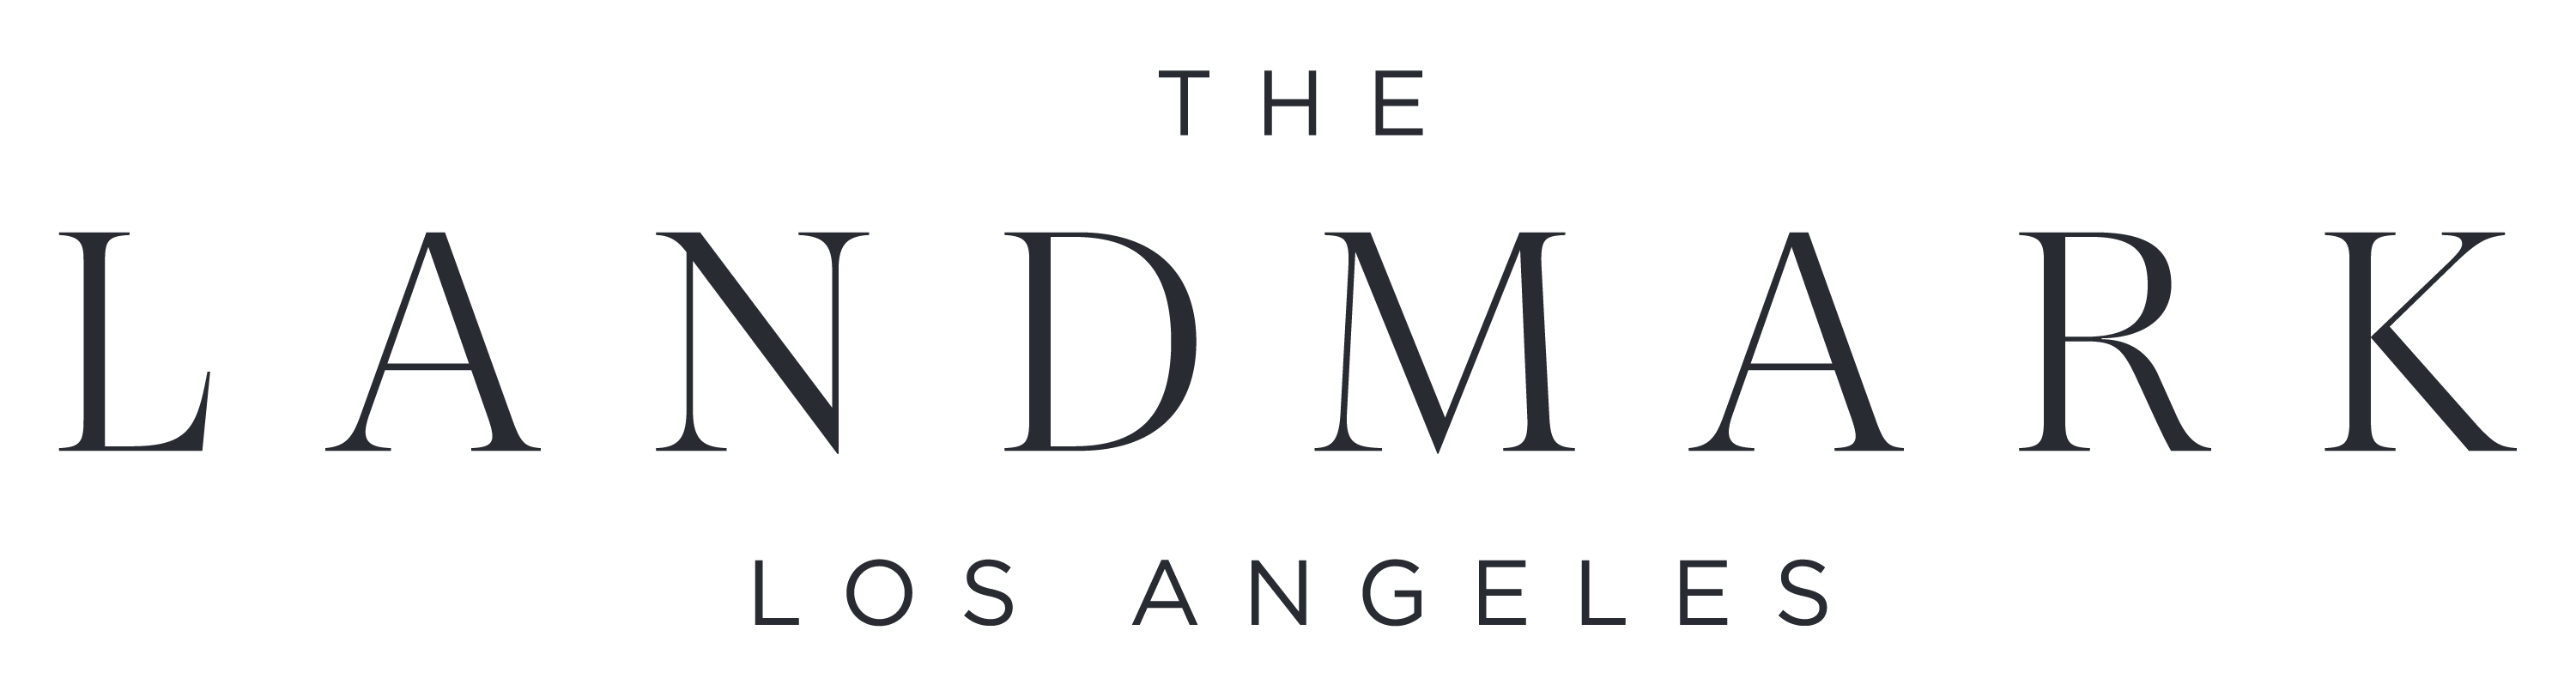 The Landmark Los Angeles logo